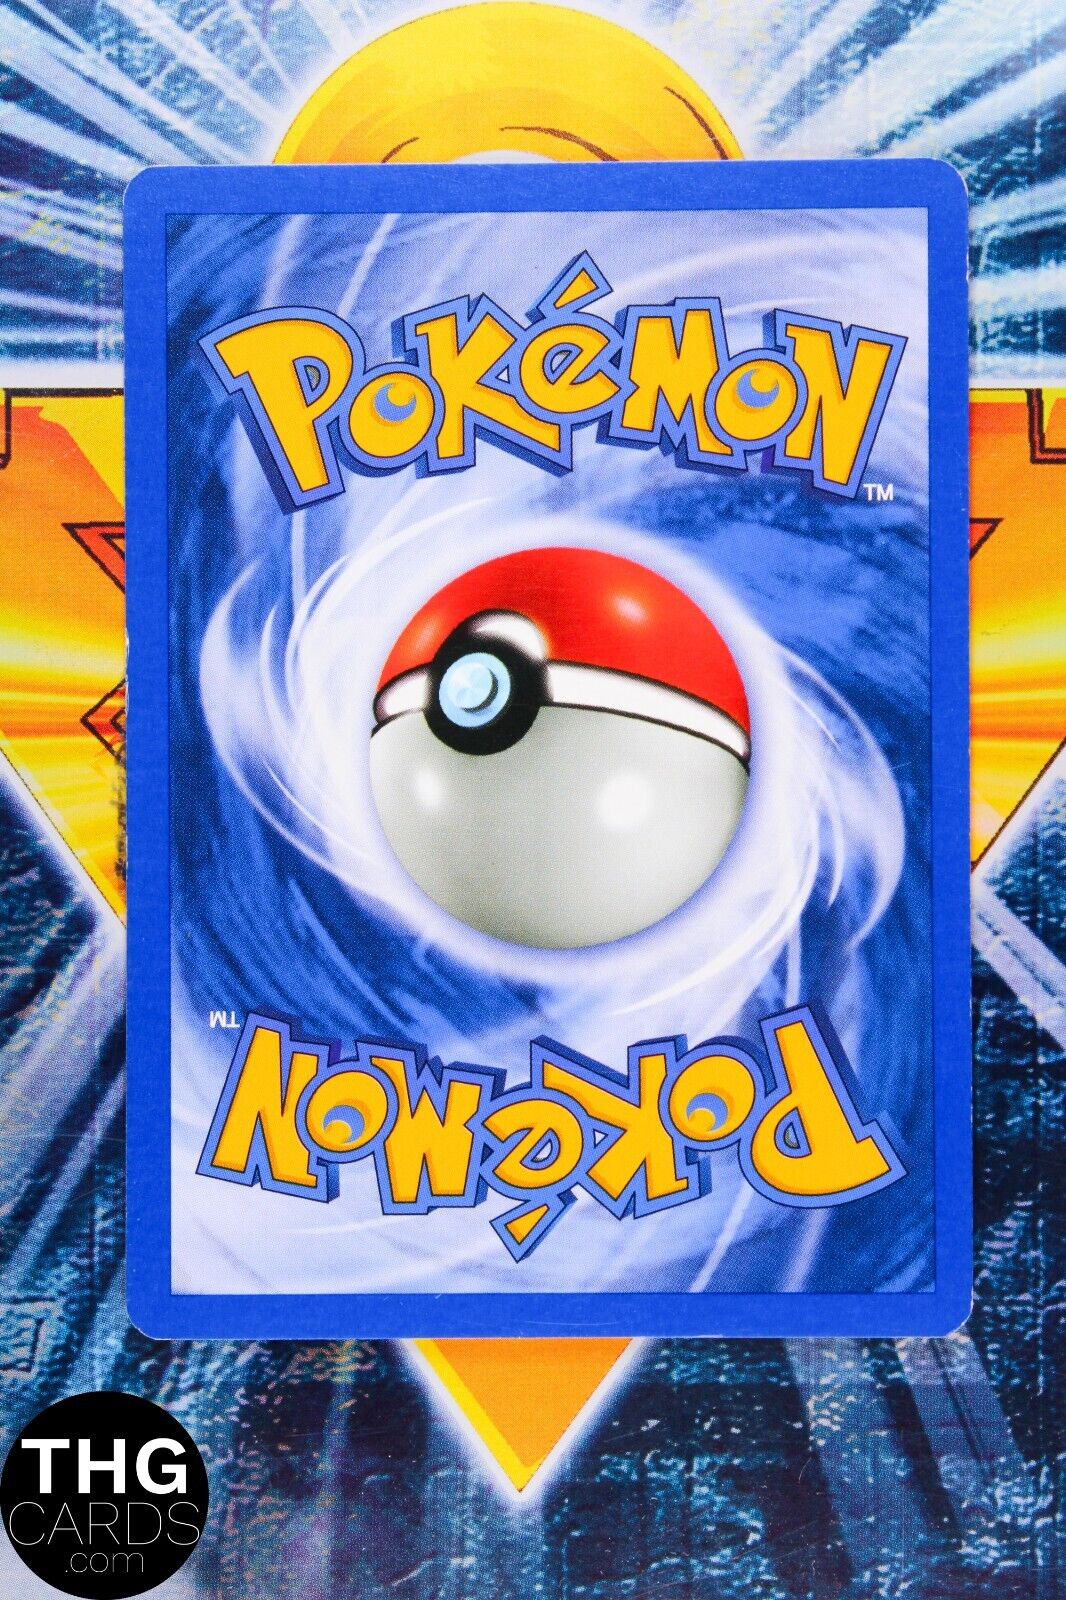 Unown K 58/64 Common Neo Revelation Pokemon Card